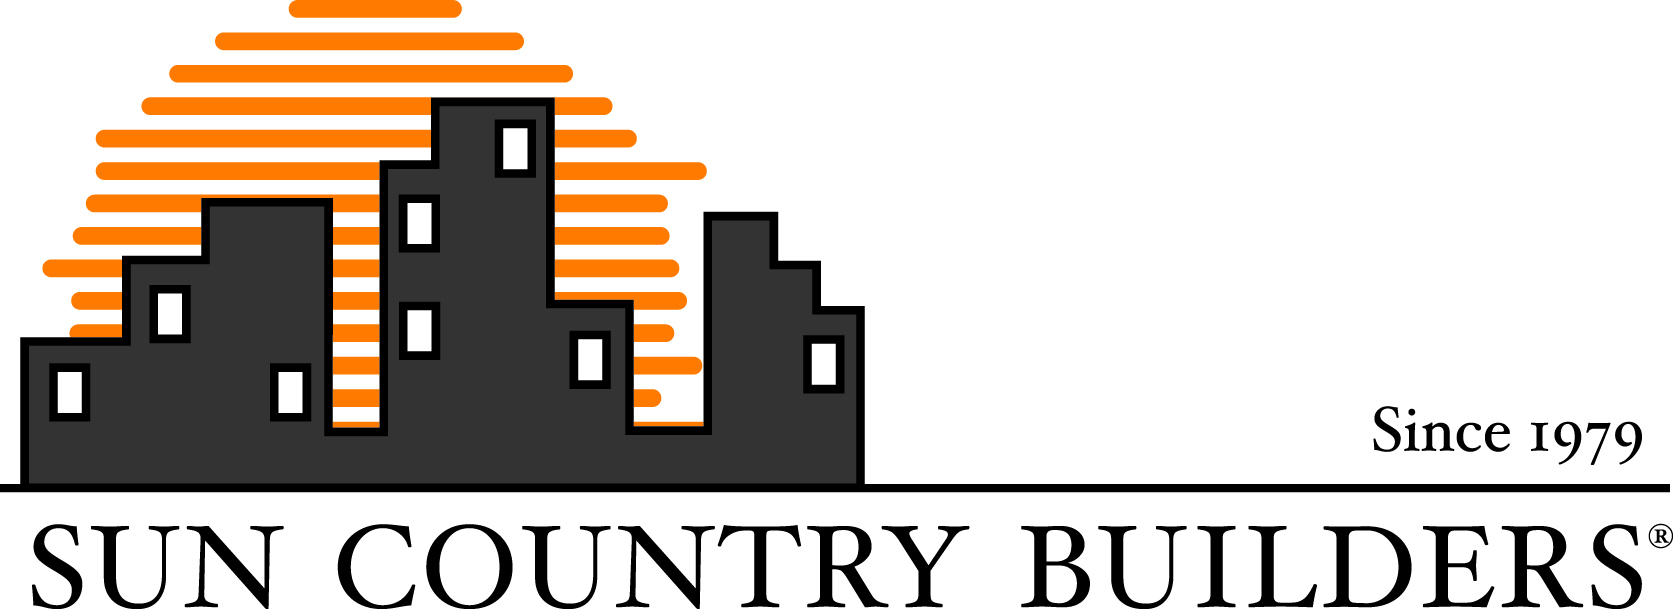 Sun Country Builders, Inc. company logo